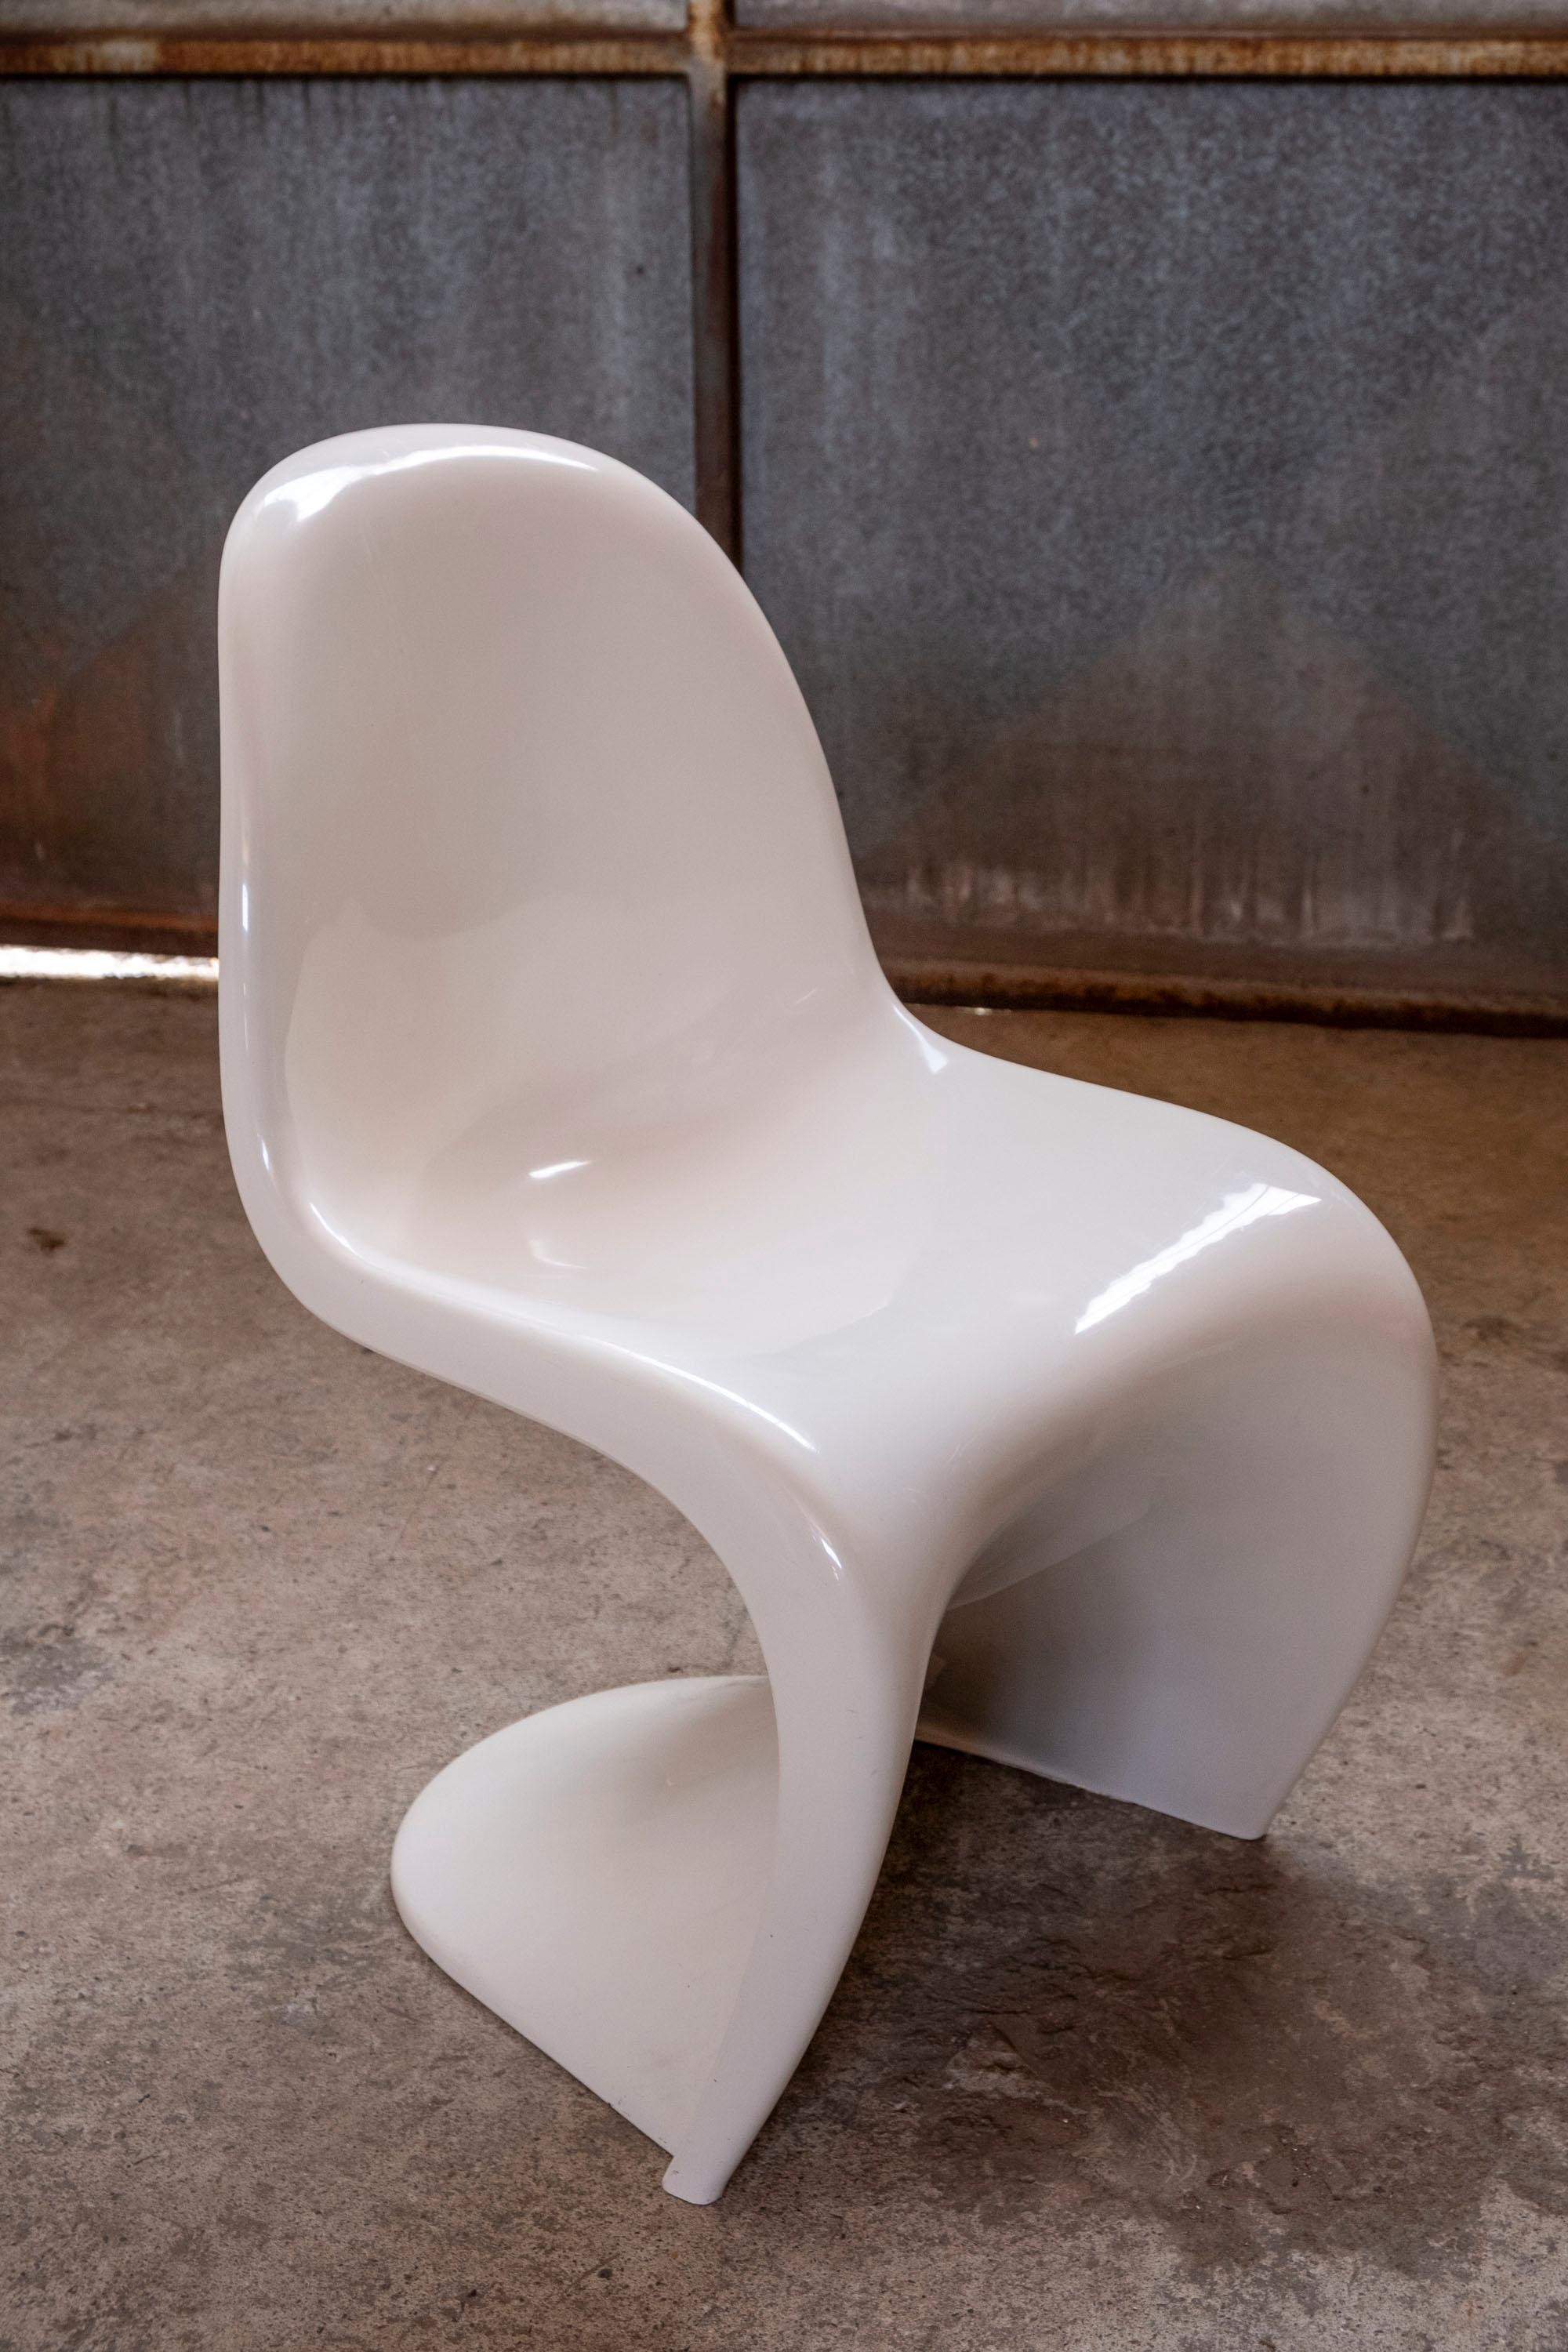 Late 20th Century Verner Panton, Panton Chair by Herman Miller Fehlbaum Production, 1978